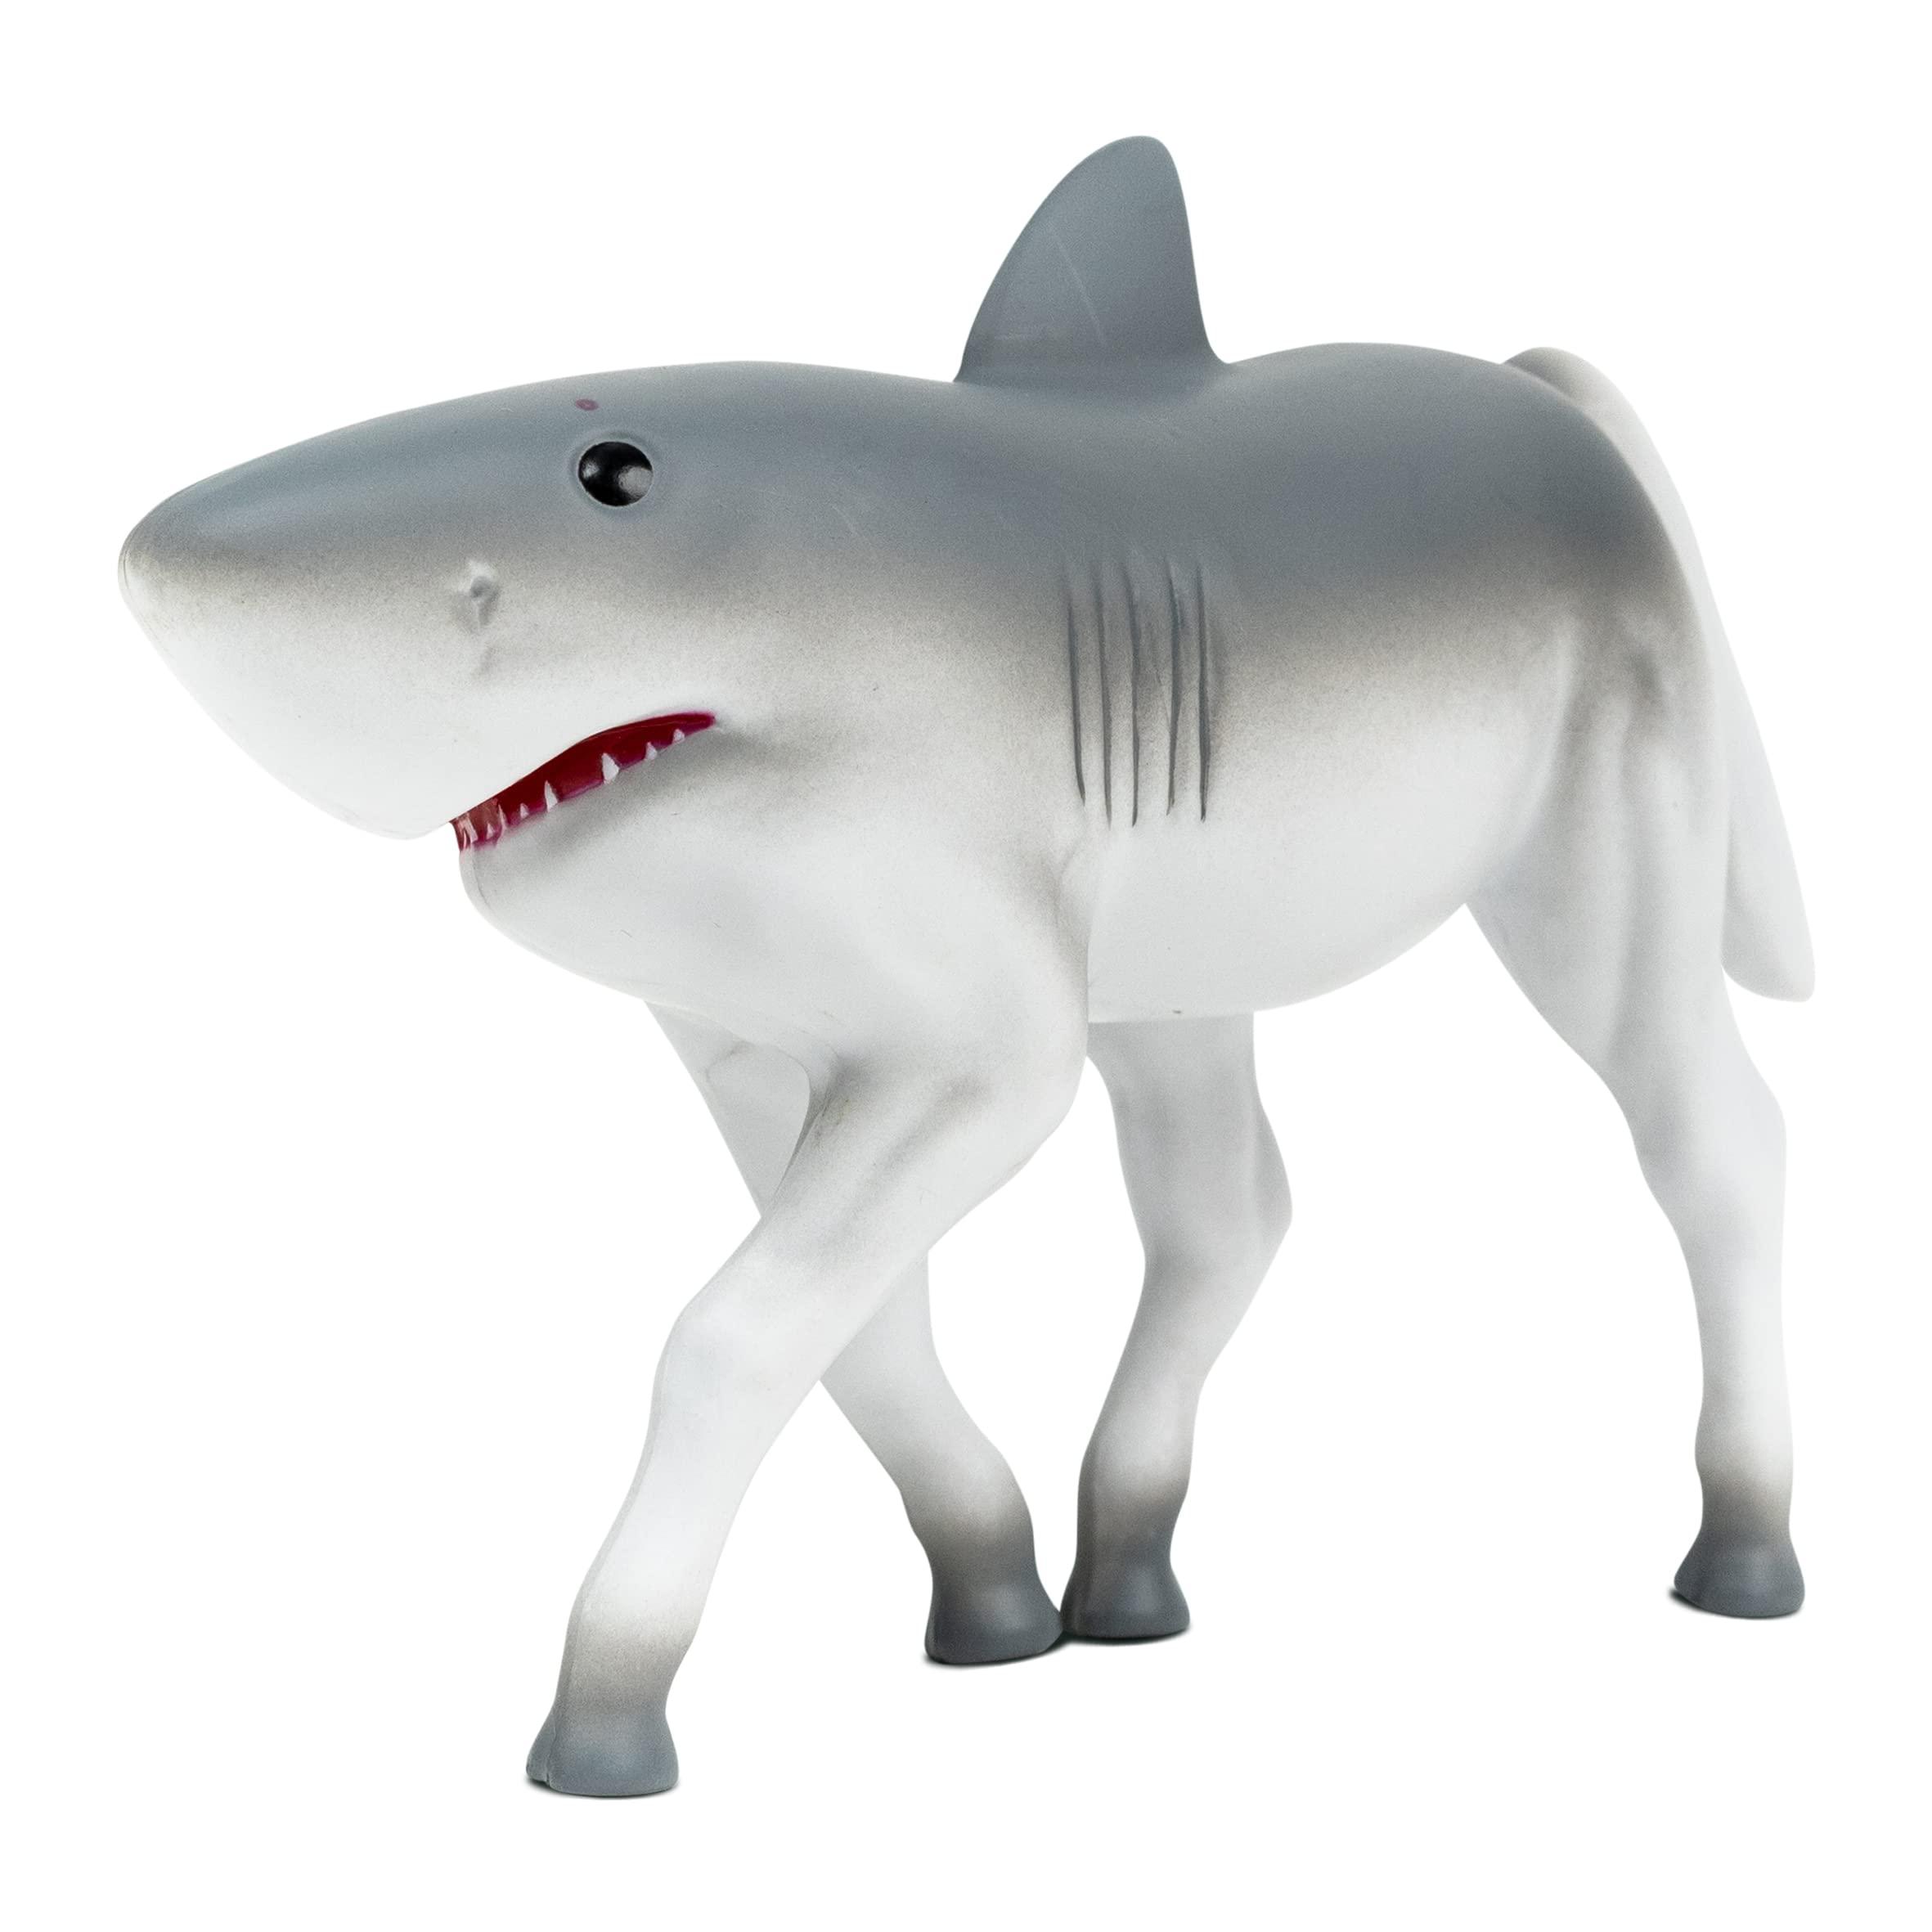 randimals horse shaped shark figurine toy 5, premium hard rubber animal action figure toy, hybrid friend encourages adventure